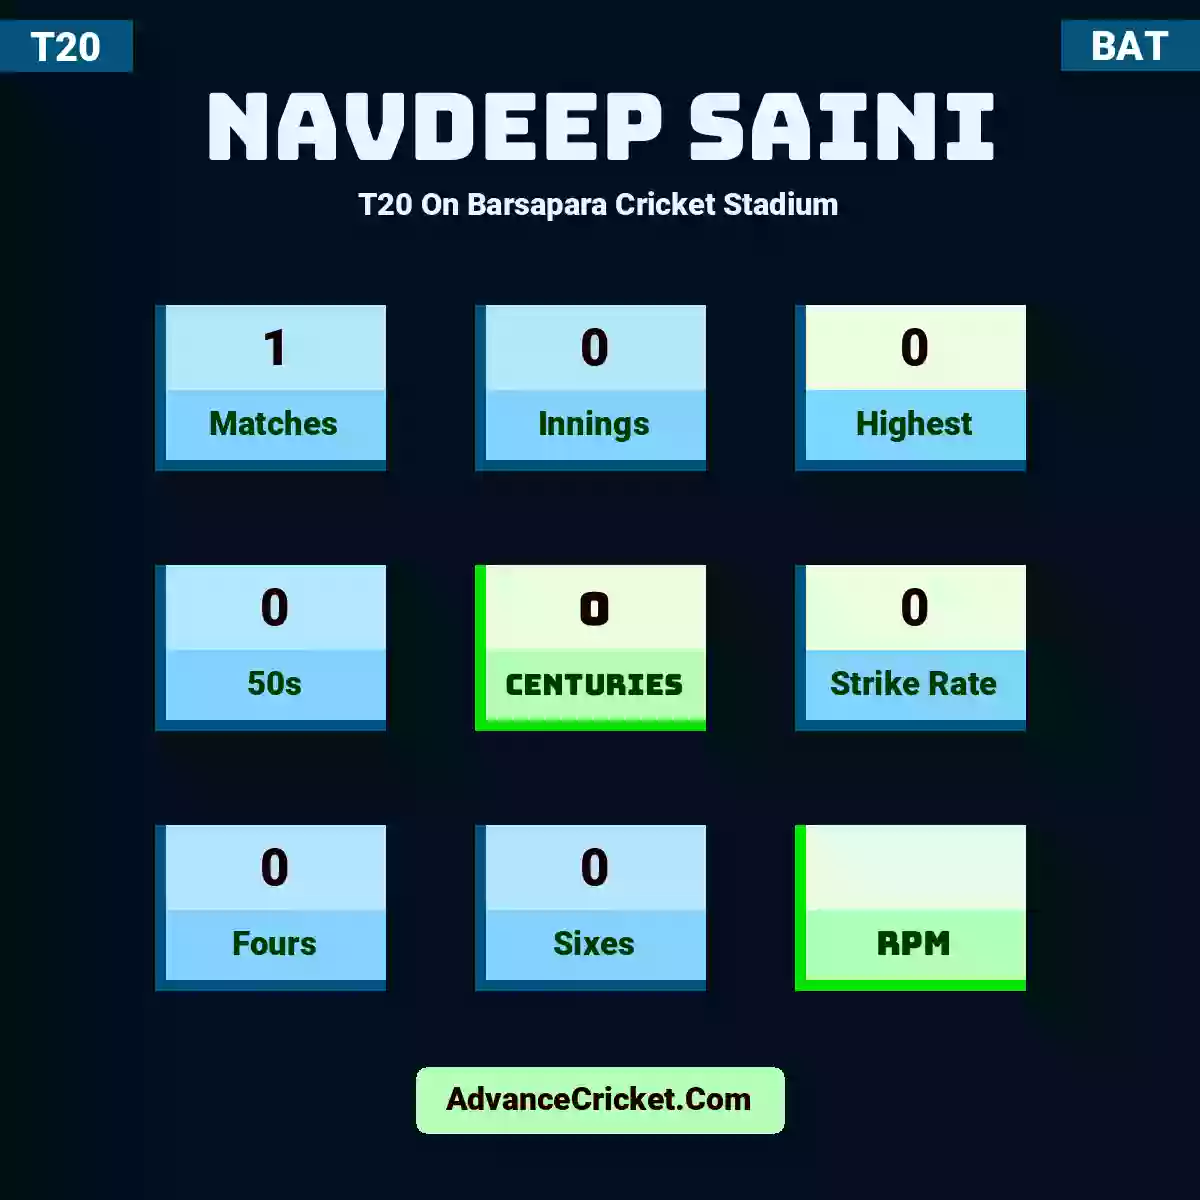 Navdeep Saini T20  On Barsapara Cricket Stadium, Navdeep Saini played 1 matches, scored 0 runs as highest, 0 half-centuries, and 0 centuries, with a strike rate of 0. N.Saini hit 0 fours and 0 sixes.